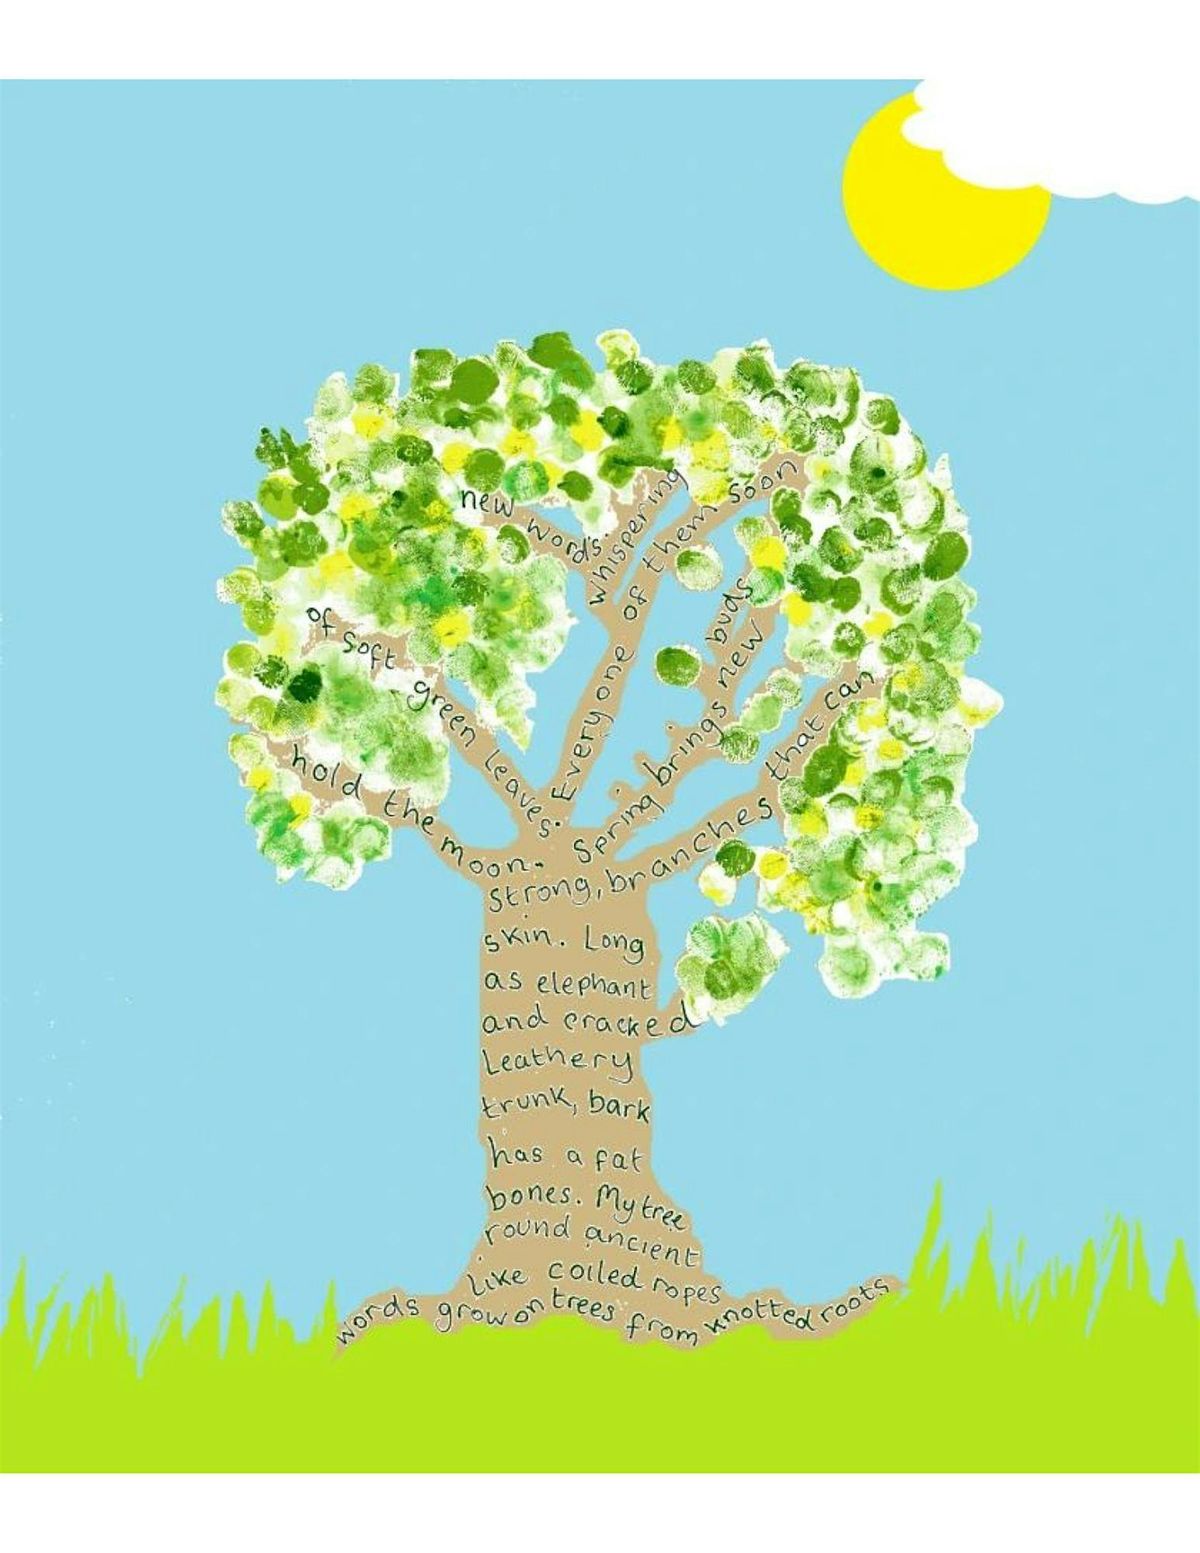 Farmhouse Family Day: Poet-Tree Day